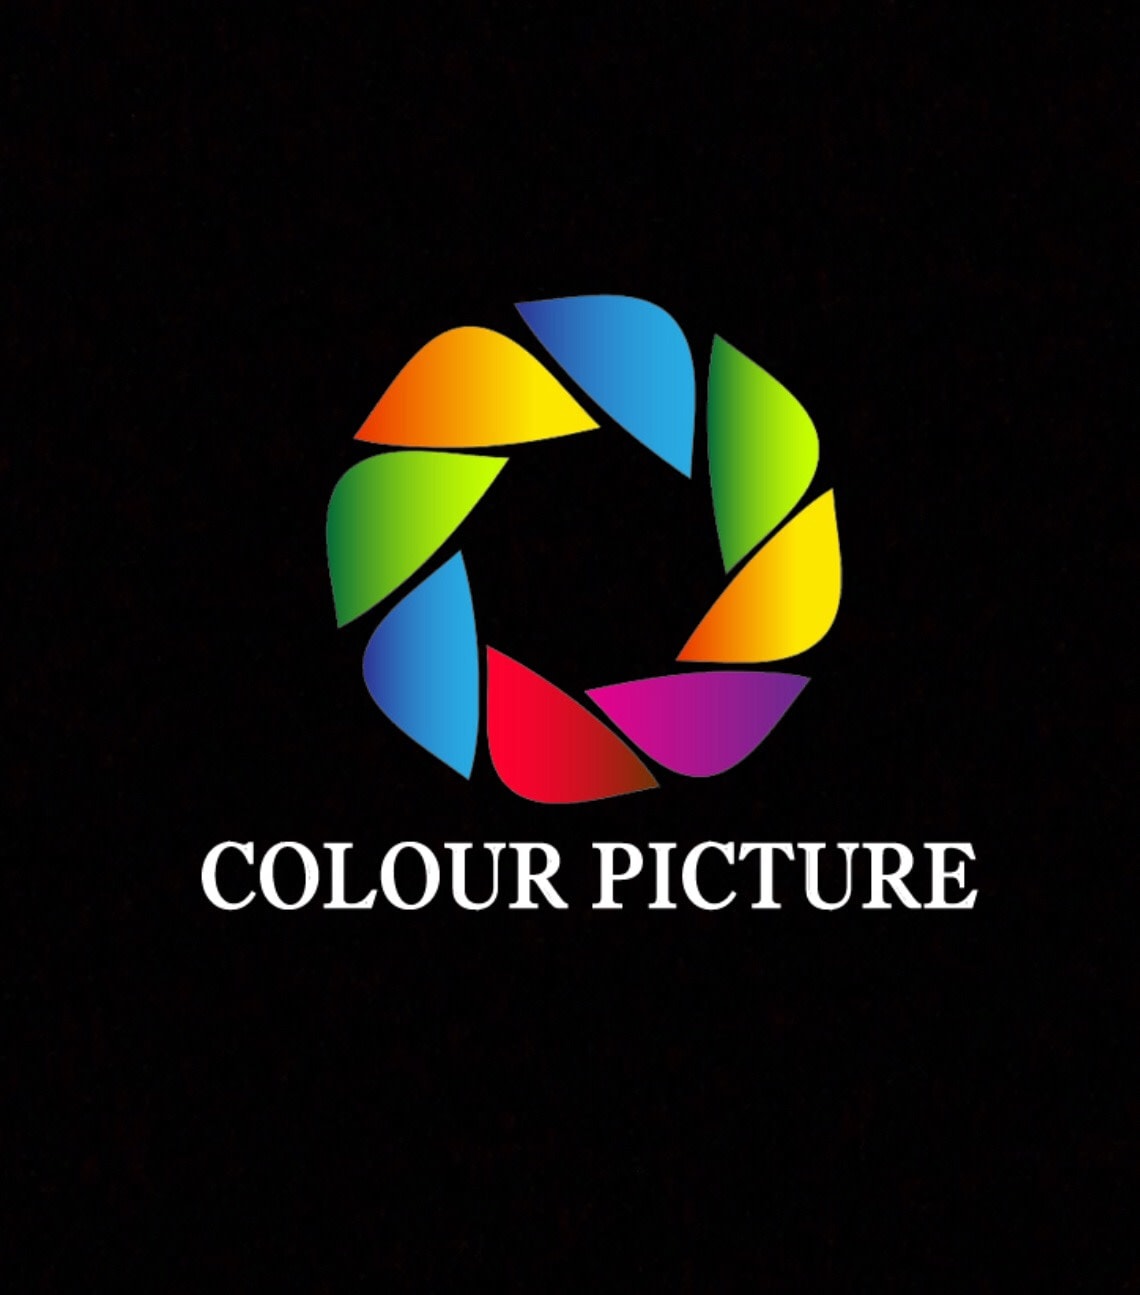 Colour Picture